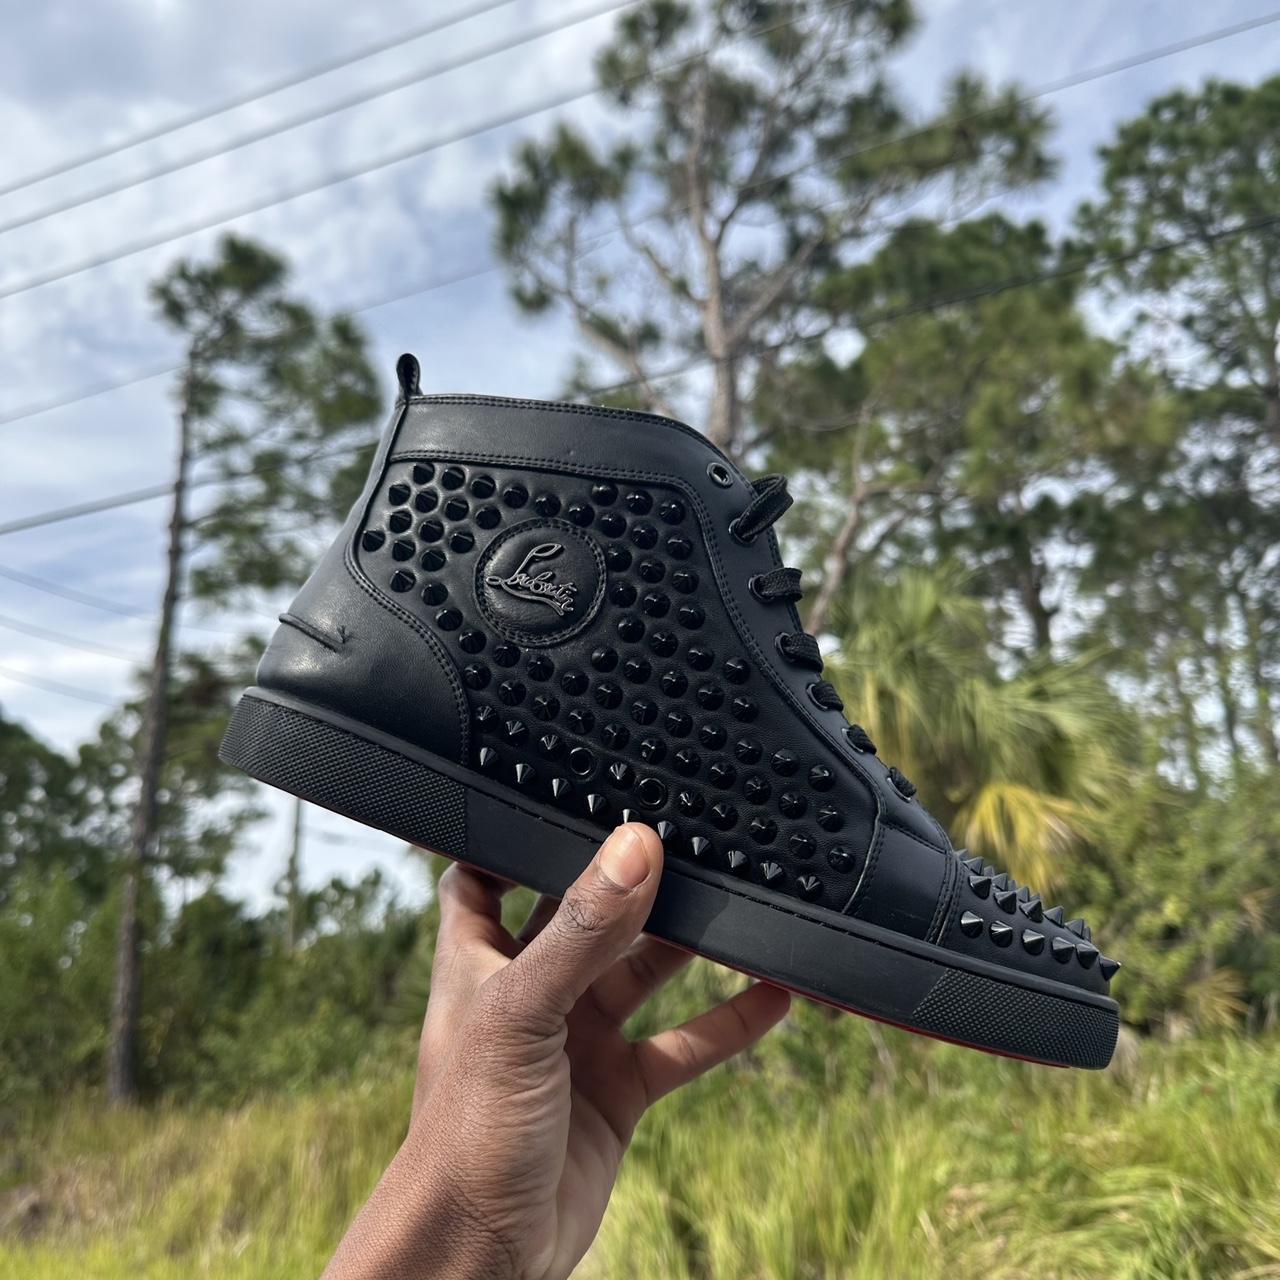 Christian Louboutin Black Louis Spikes Sneakers for Men